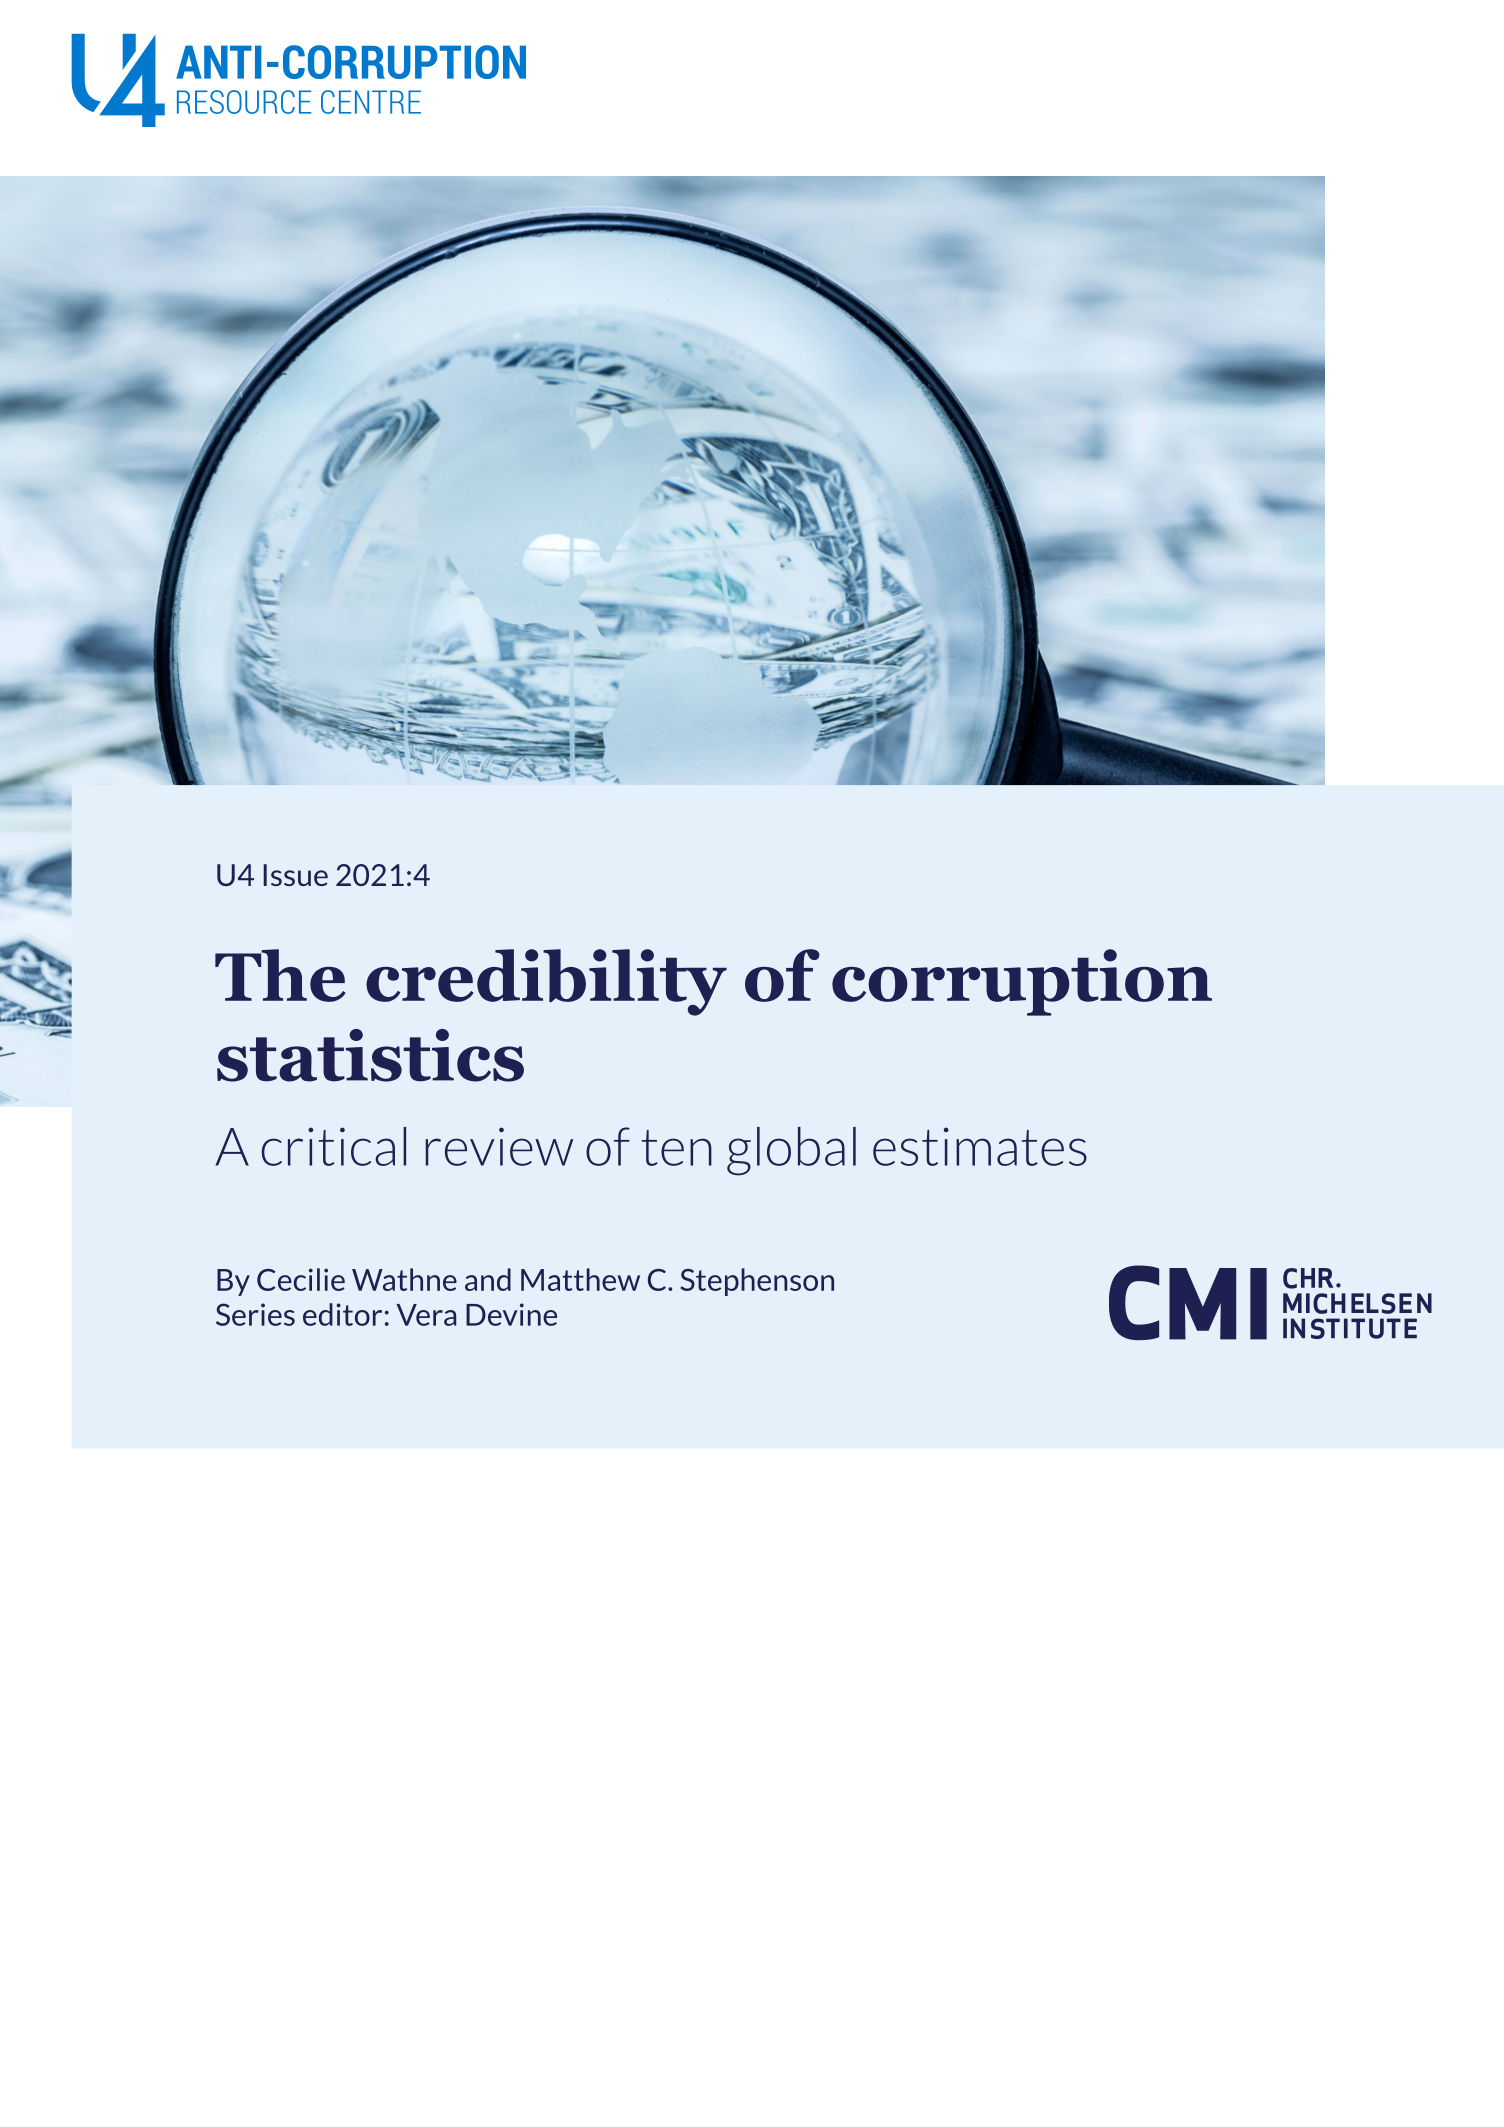 The credibility of corruption statistics